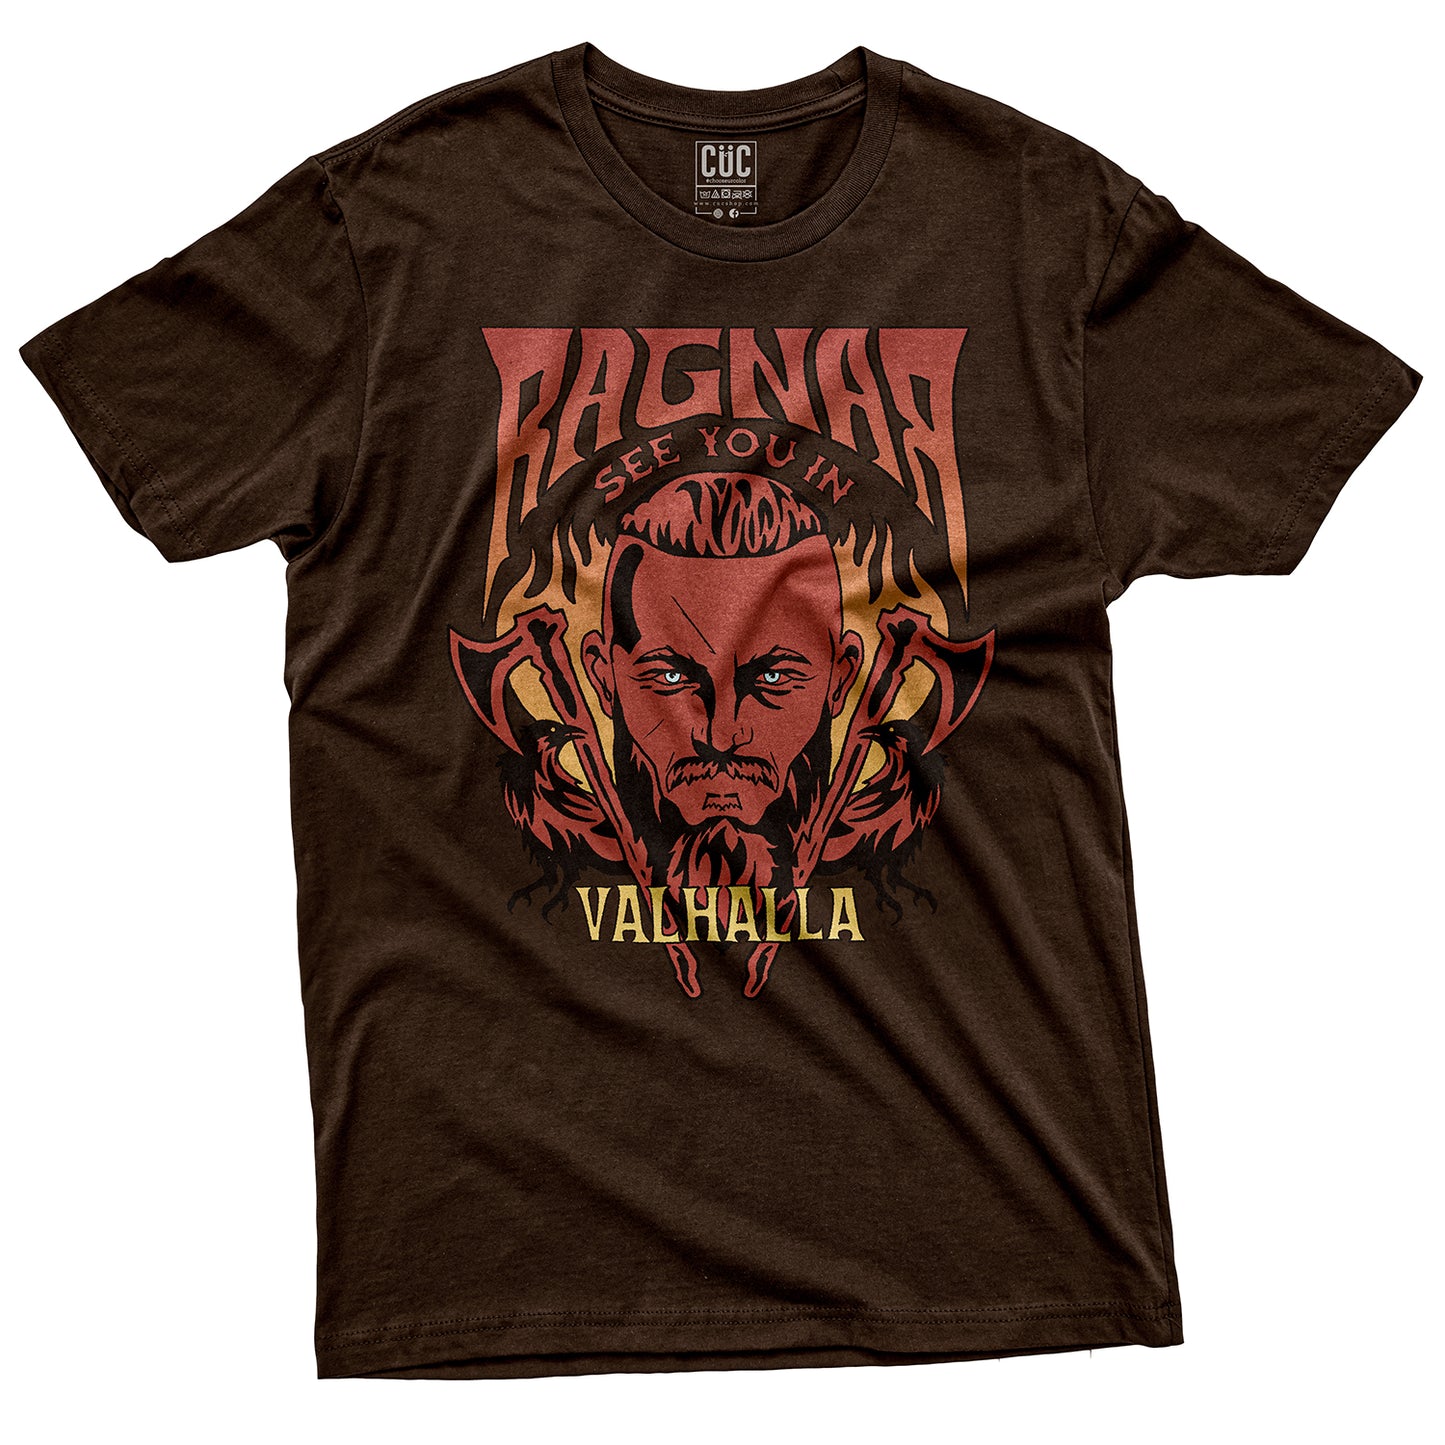 CUC T-Shirt - RAGNAR - Vikings - Valhalla #chooseurcolor - CUC chooseurcolor